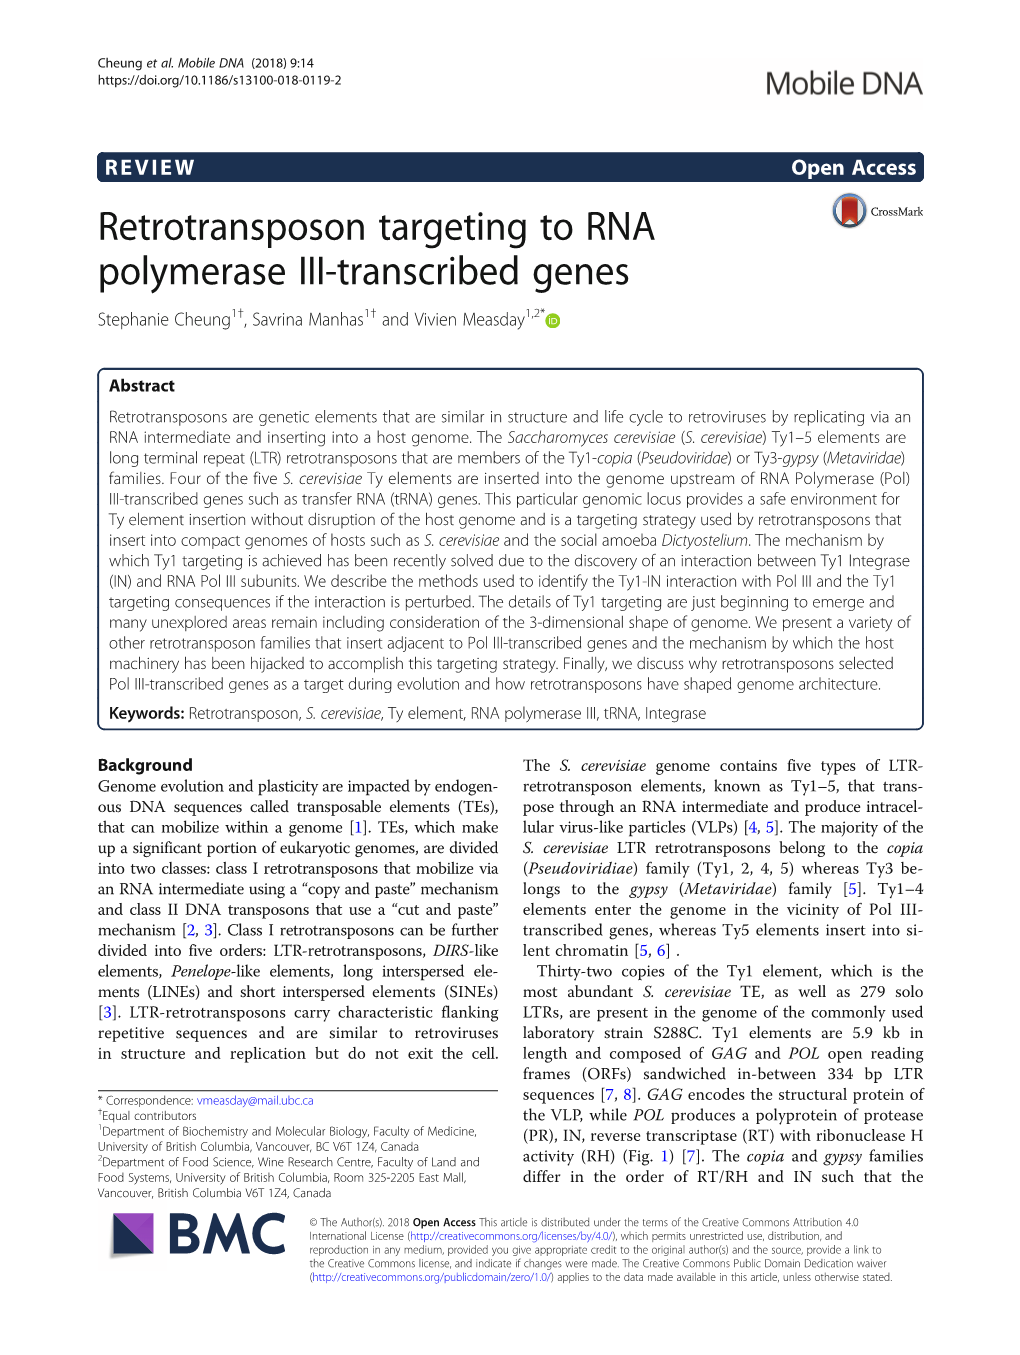 Retrotransposon Targeting to RNA Polymerase III-Transcribed Genes Stephanie Cheung1†, Savrina Manhas1† and Vivien Measday1,2*